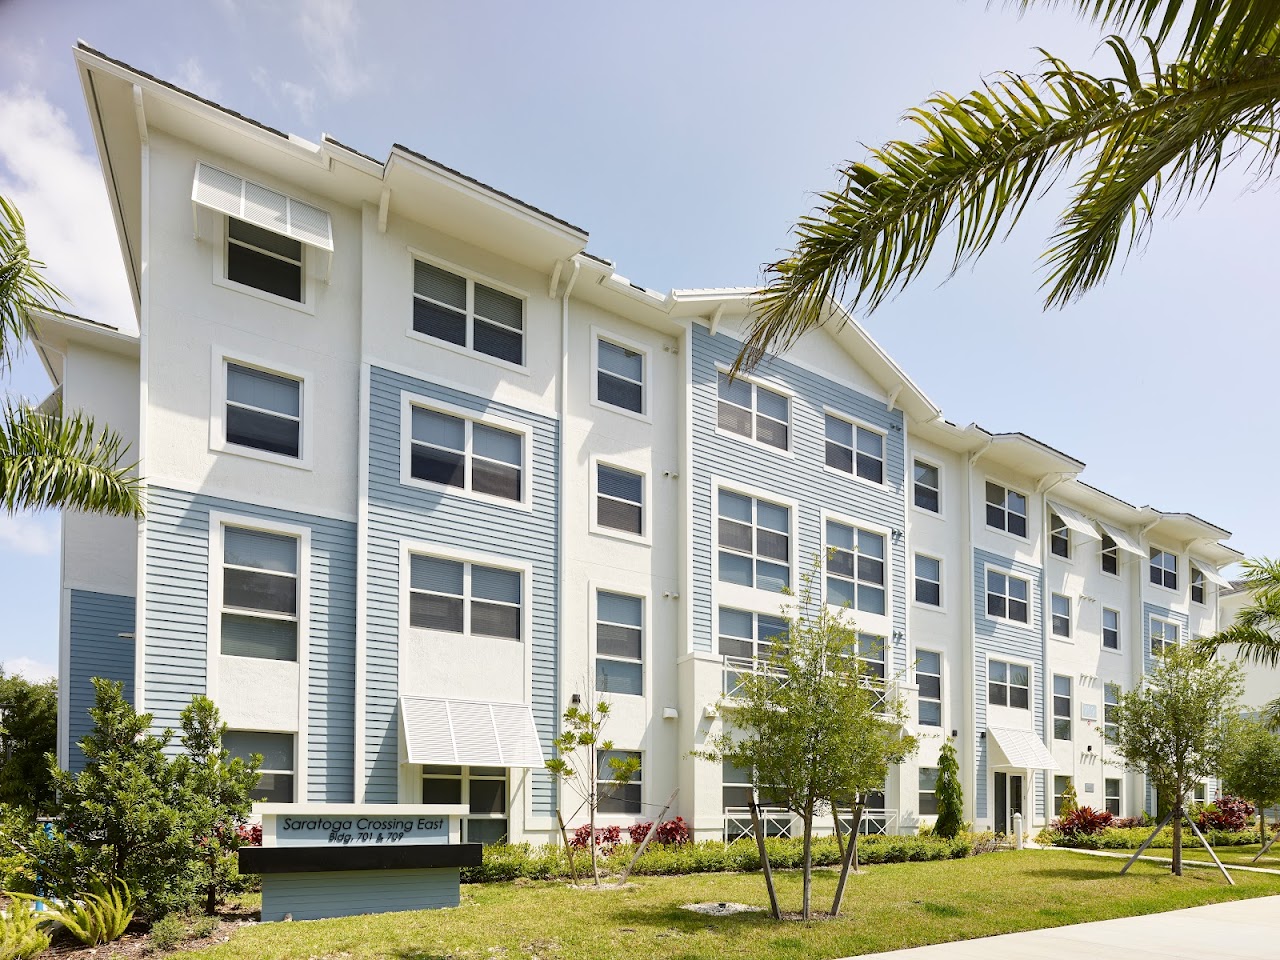 Photo of SARATOGA CROSSINGS. Affordable housing located at 1105 WEST DANIA BEACH BOULEVARD DANIA BEACH, FL 33004